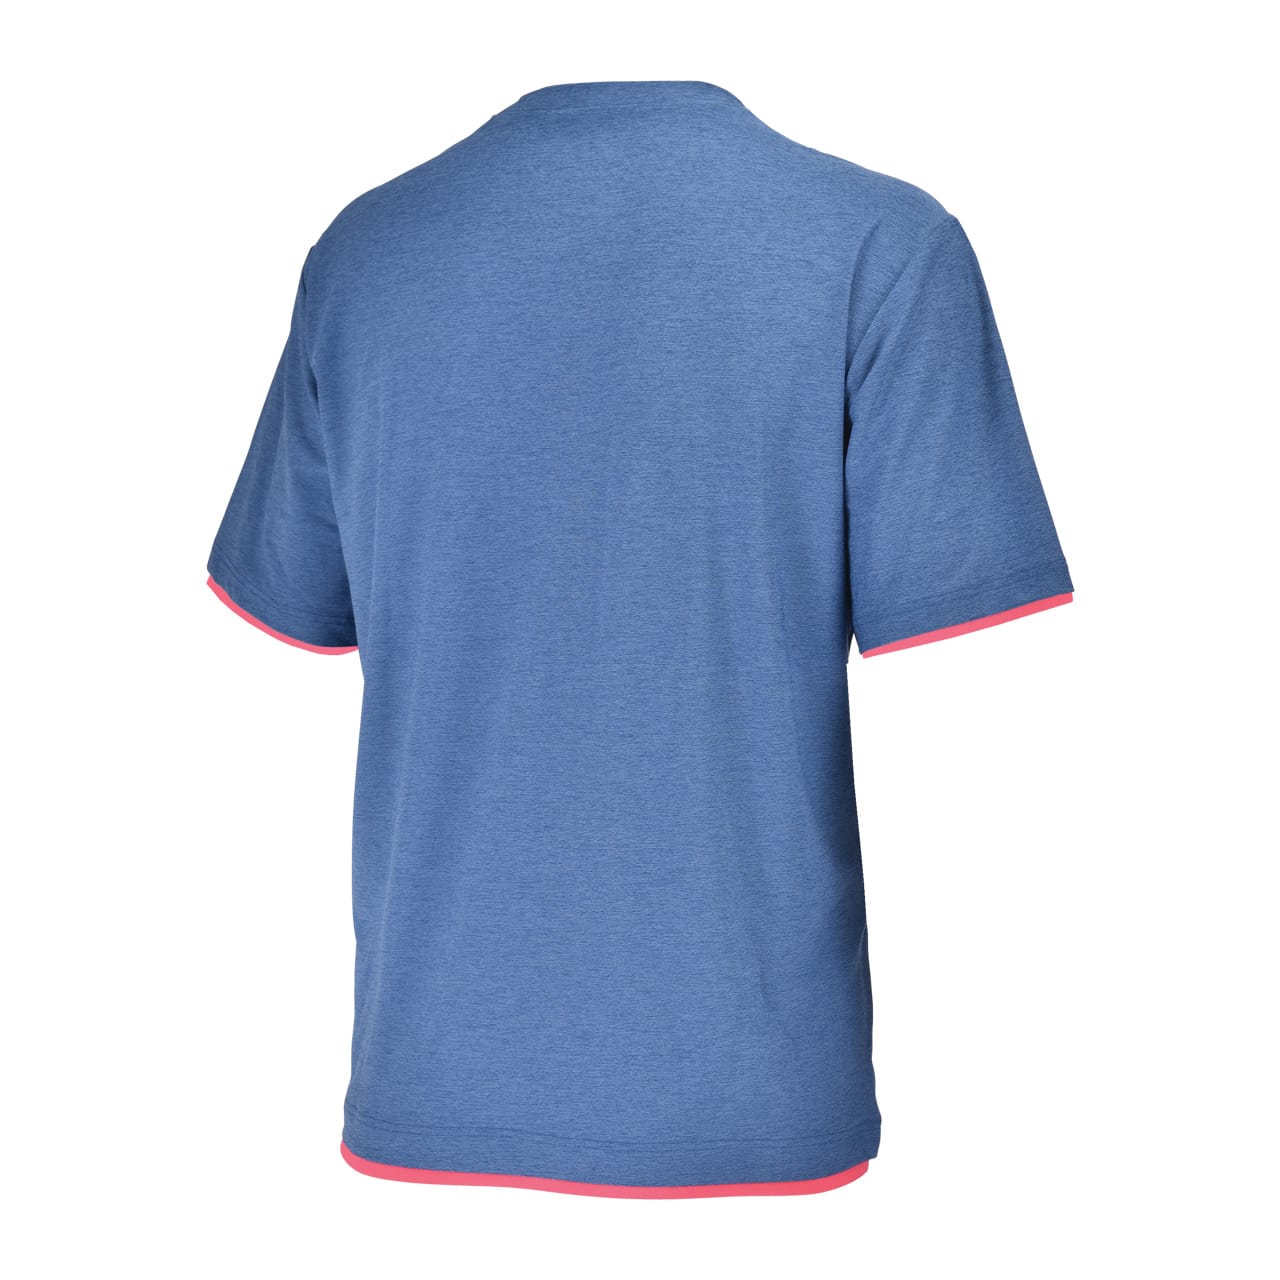 Crew Neck / Relax Shirt (All Seasonモデル) メンズ JR1935 2021 Spring-Summer スポーツウェア クルーネック Tシャツ 吸汗 速乾 温度調節 紫外線防止 ストレッチ性 長期抗菌 防臭 静電気防止